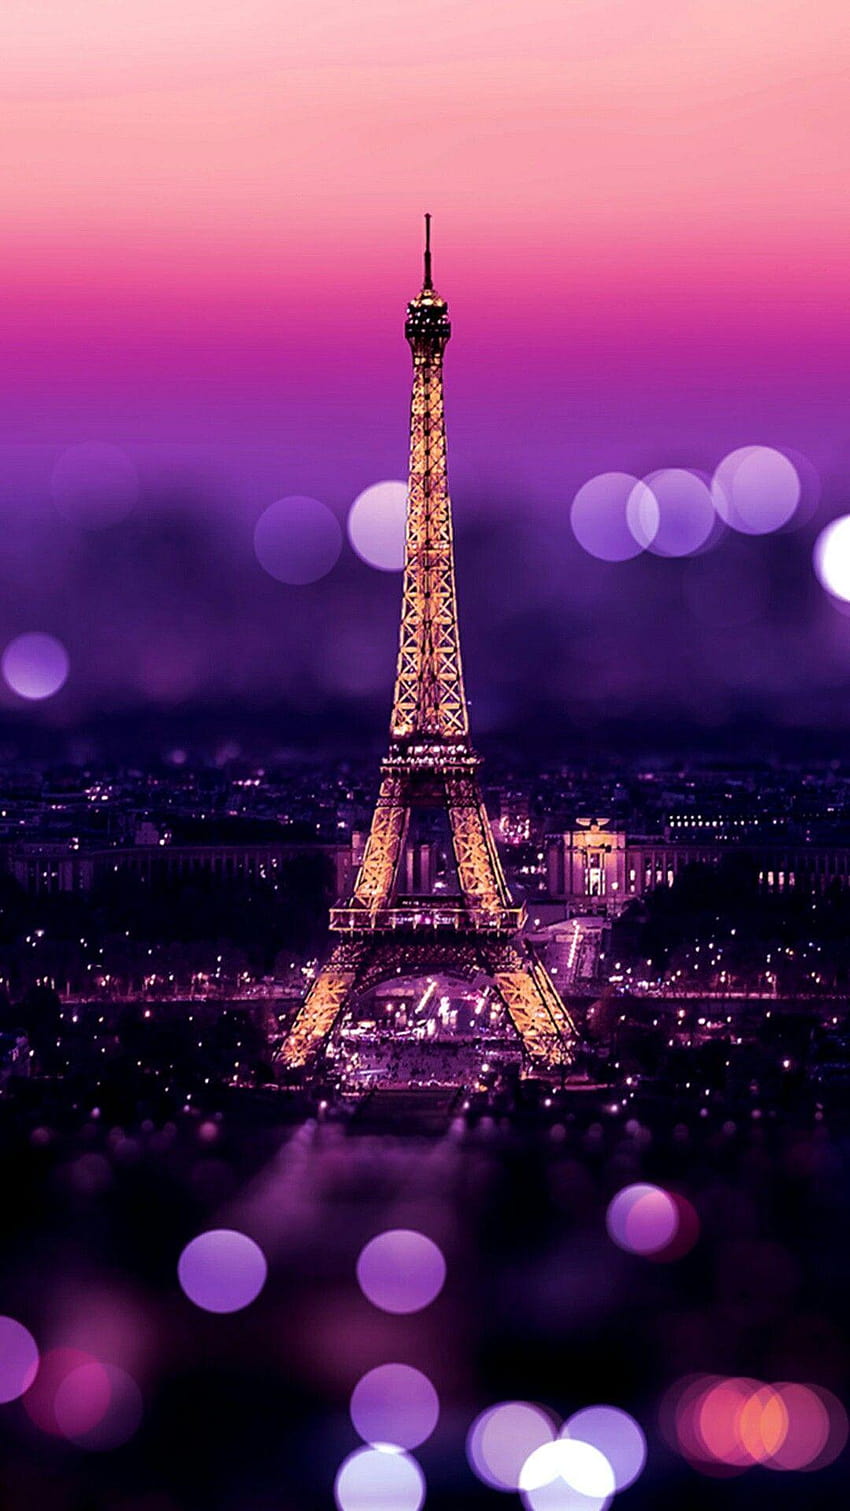 100 EiffelTower Images  France HD  Download Free Images on Unsplash